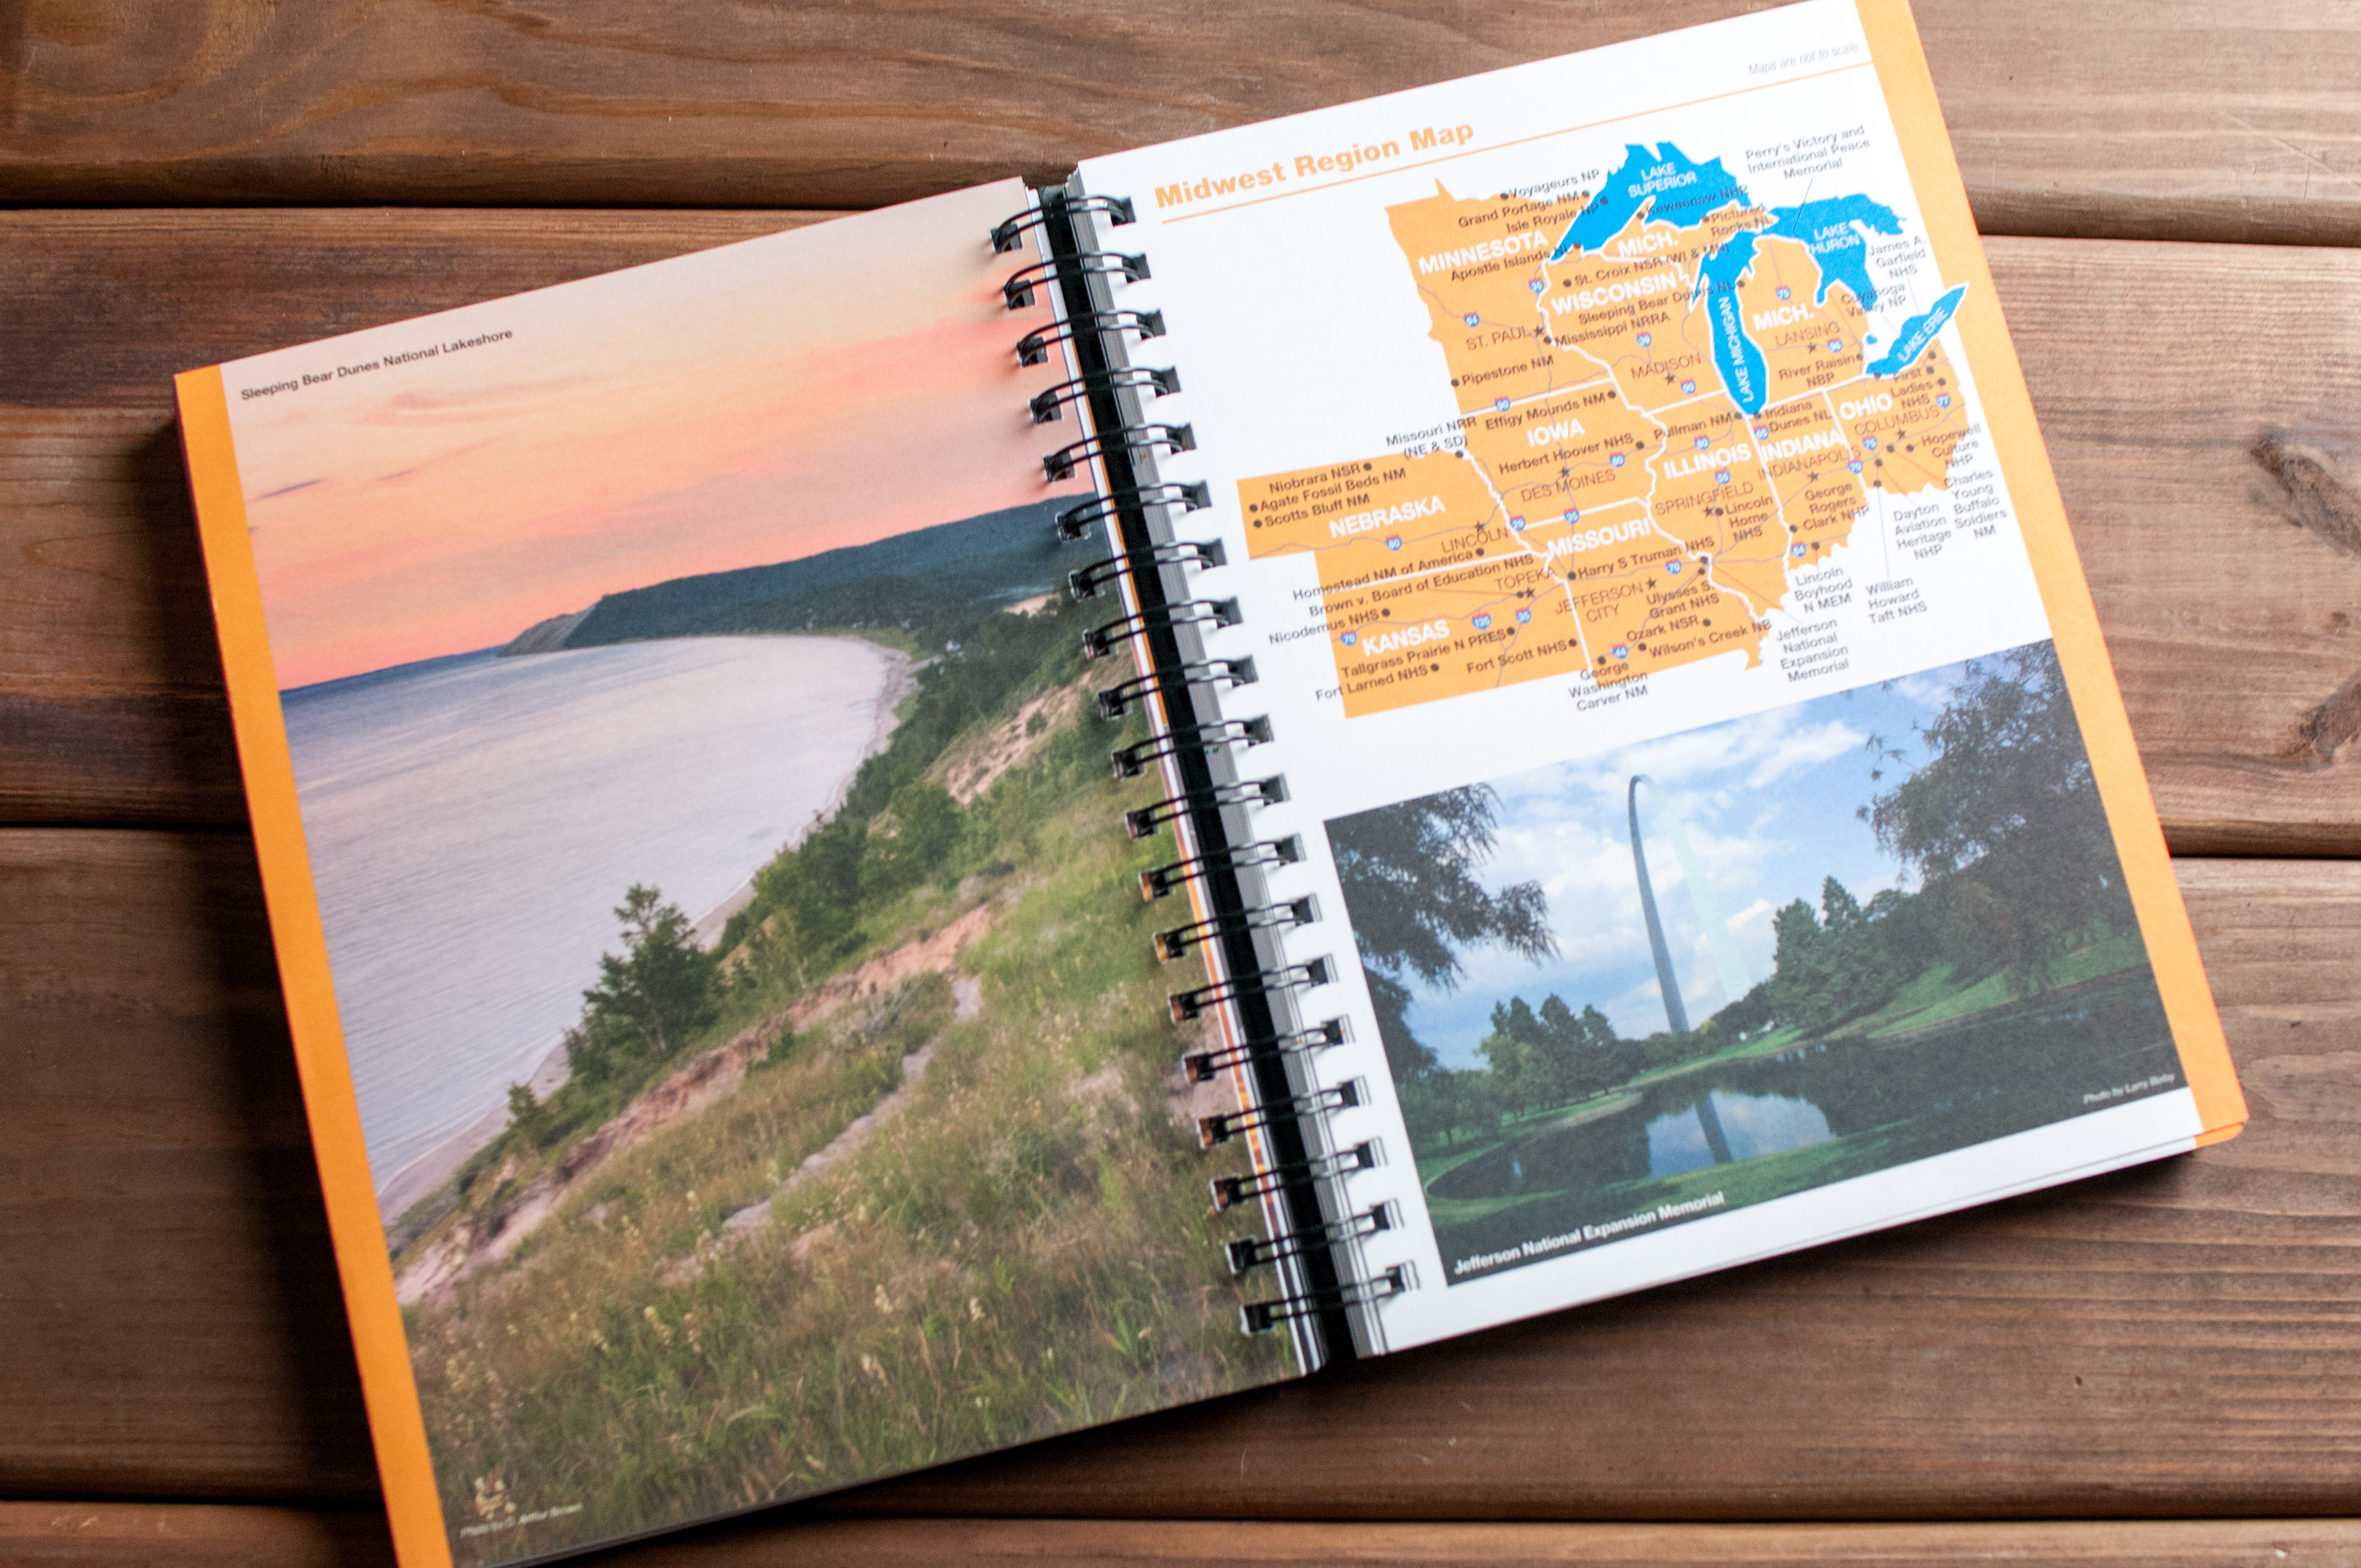 National Park Passport Program - Full Map Spread